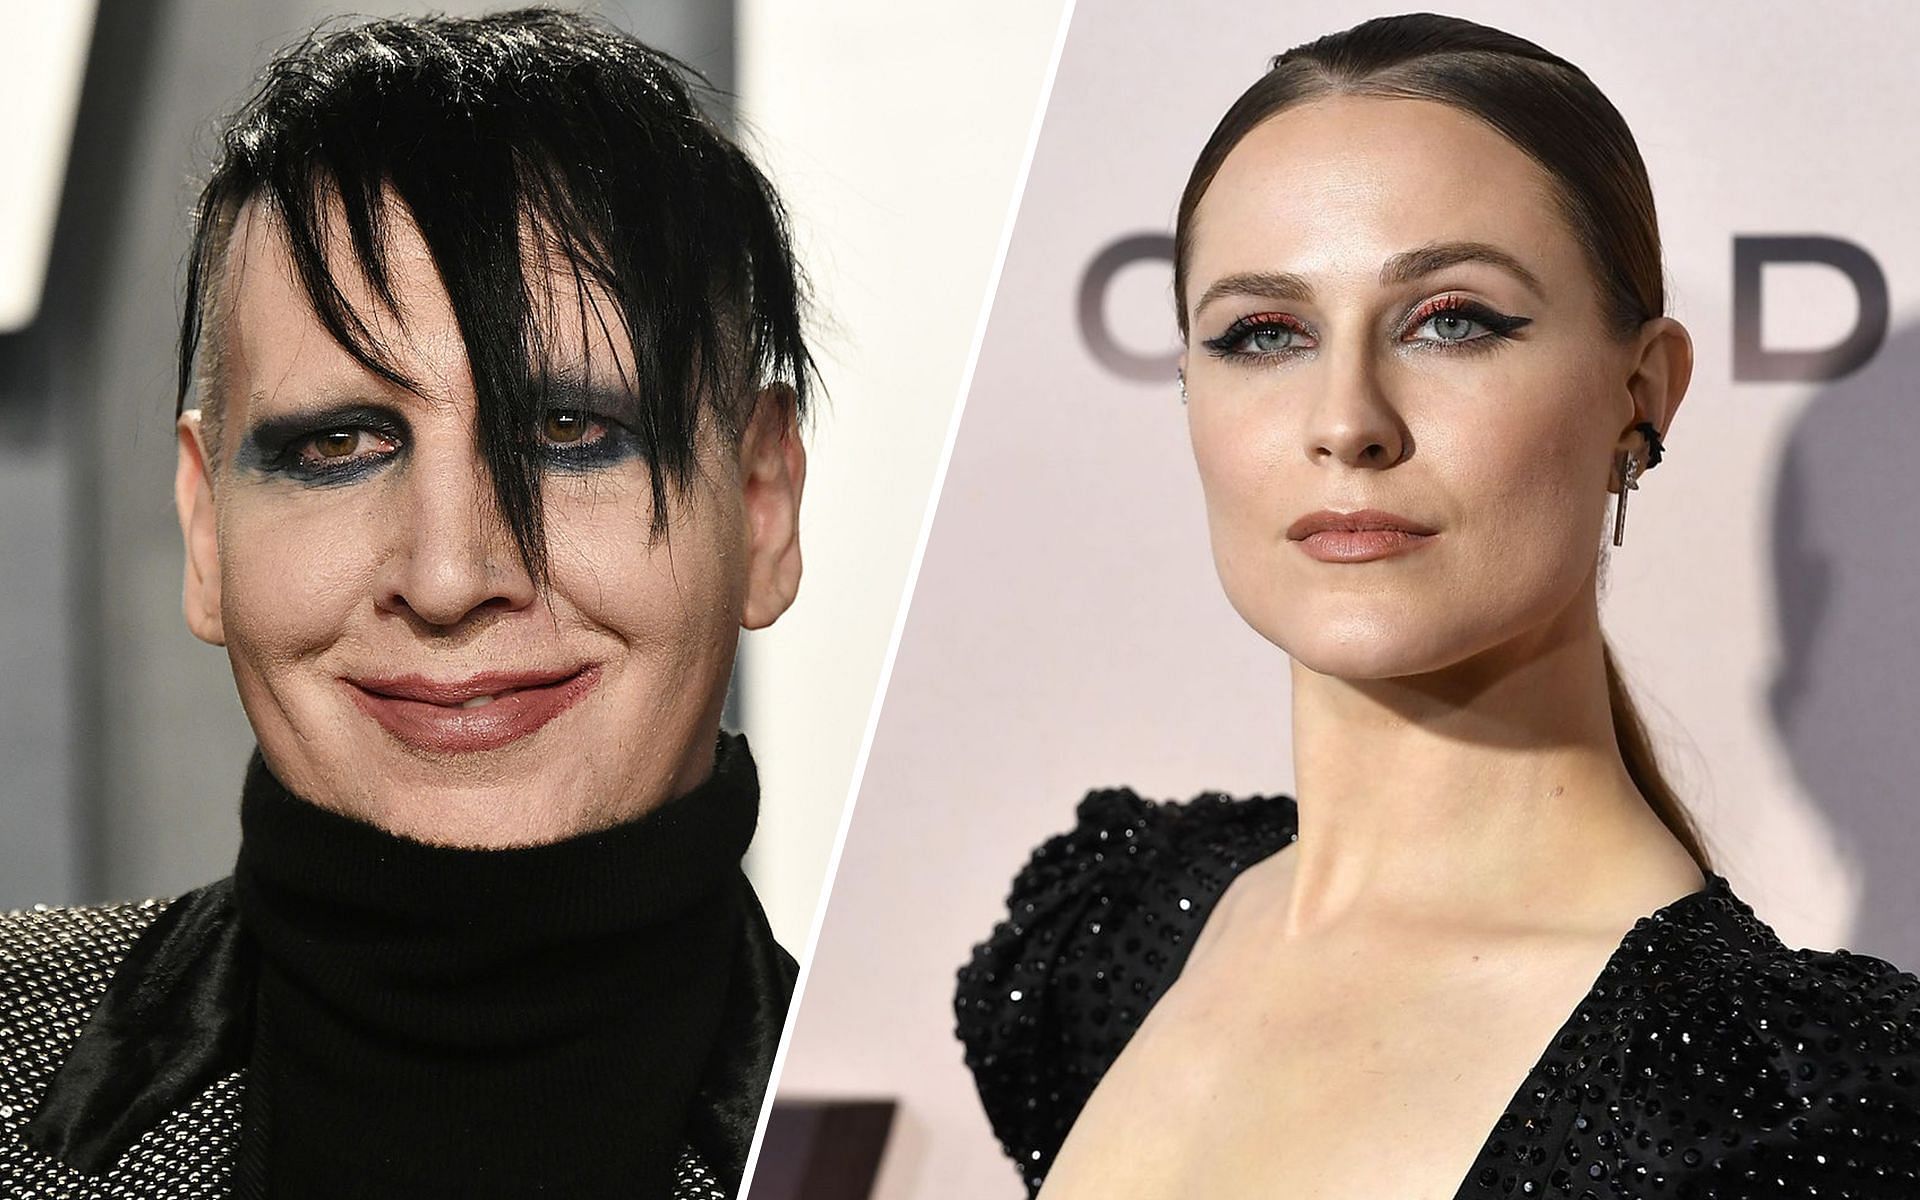 Evan Rachel Wood And Marilyn Manson Relationship Timeline Explored As